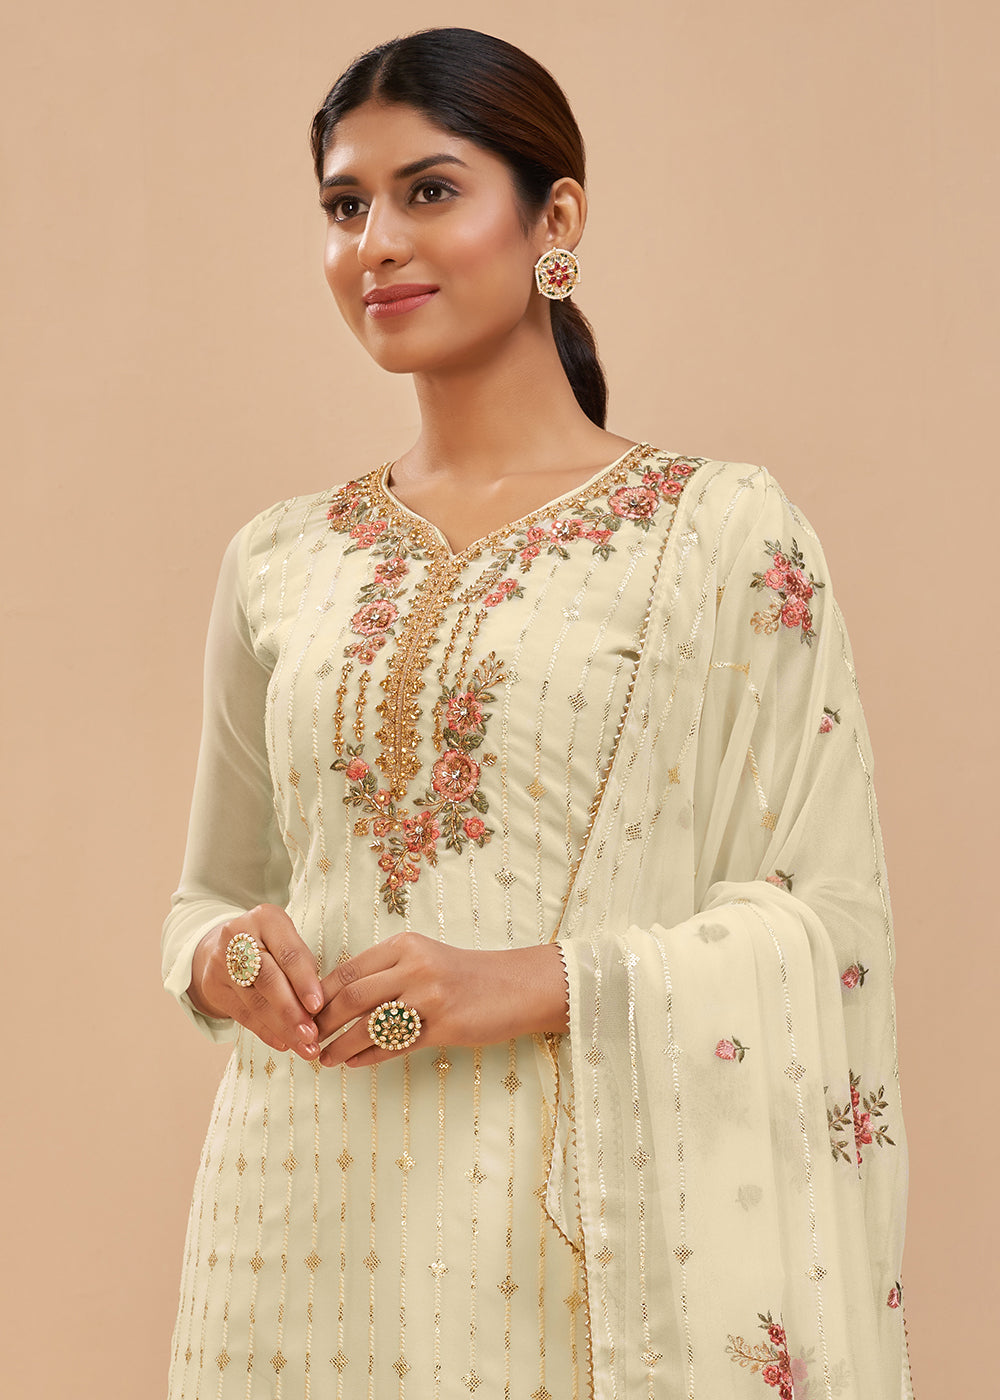 Buy Pale Yellow Beautifully Embroidered Suit - Elegant Salwar Kameez